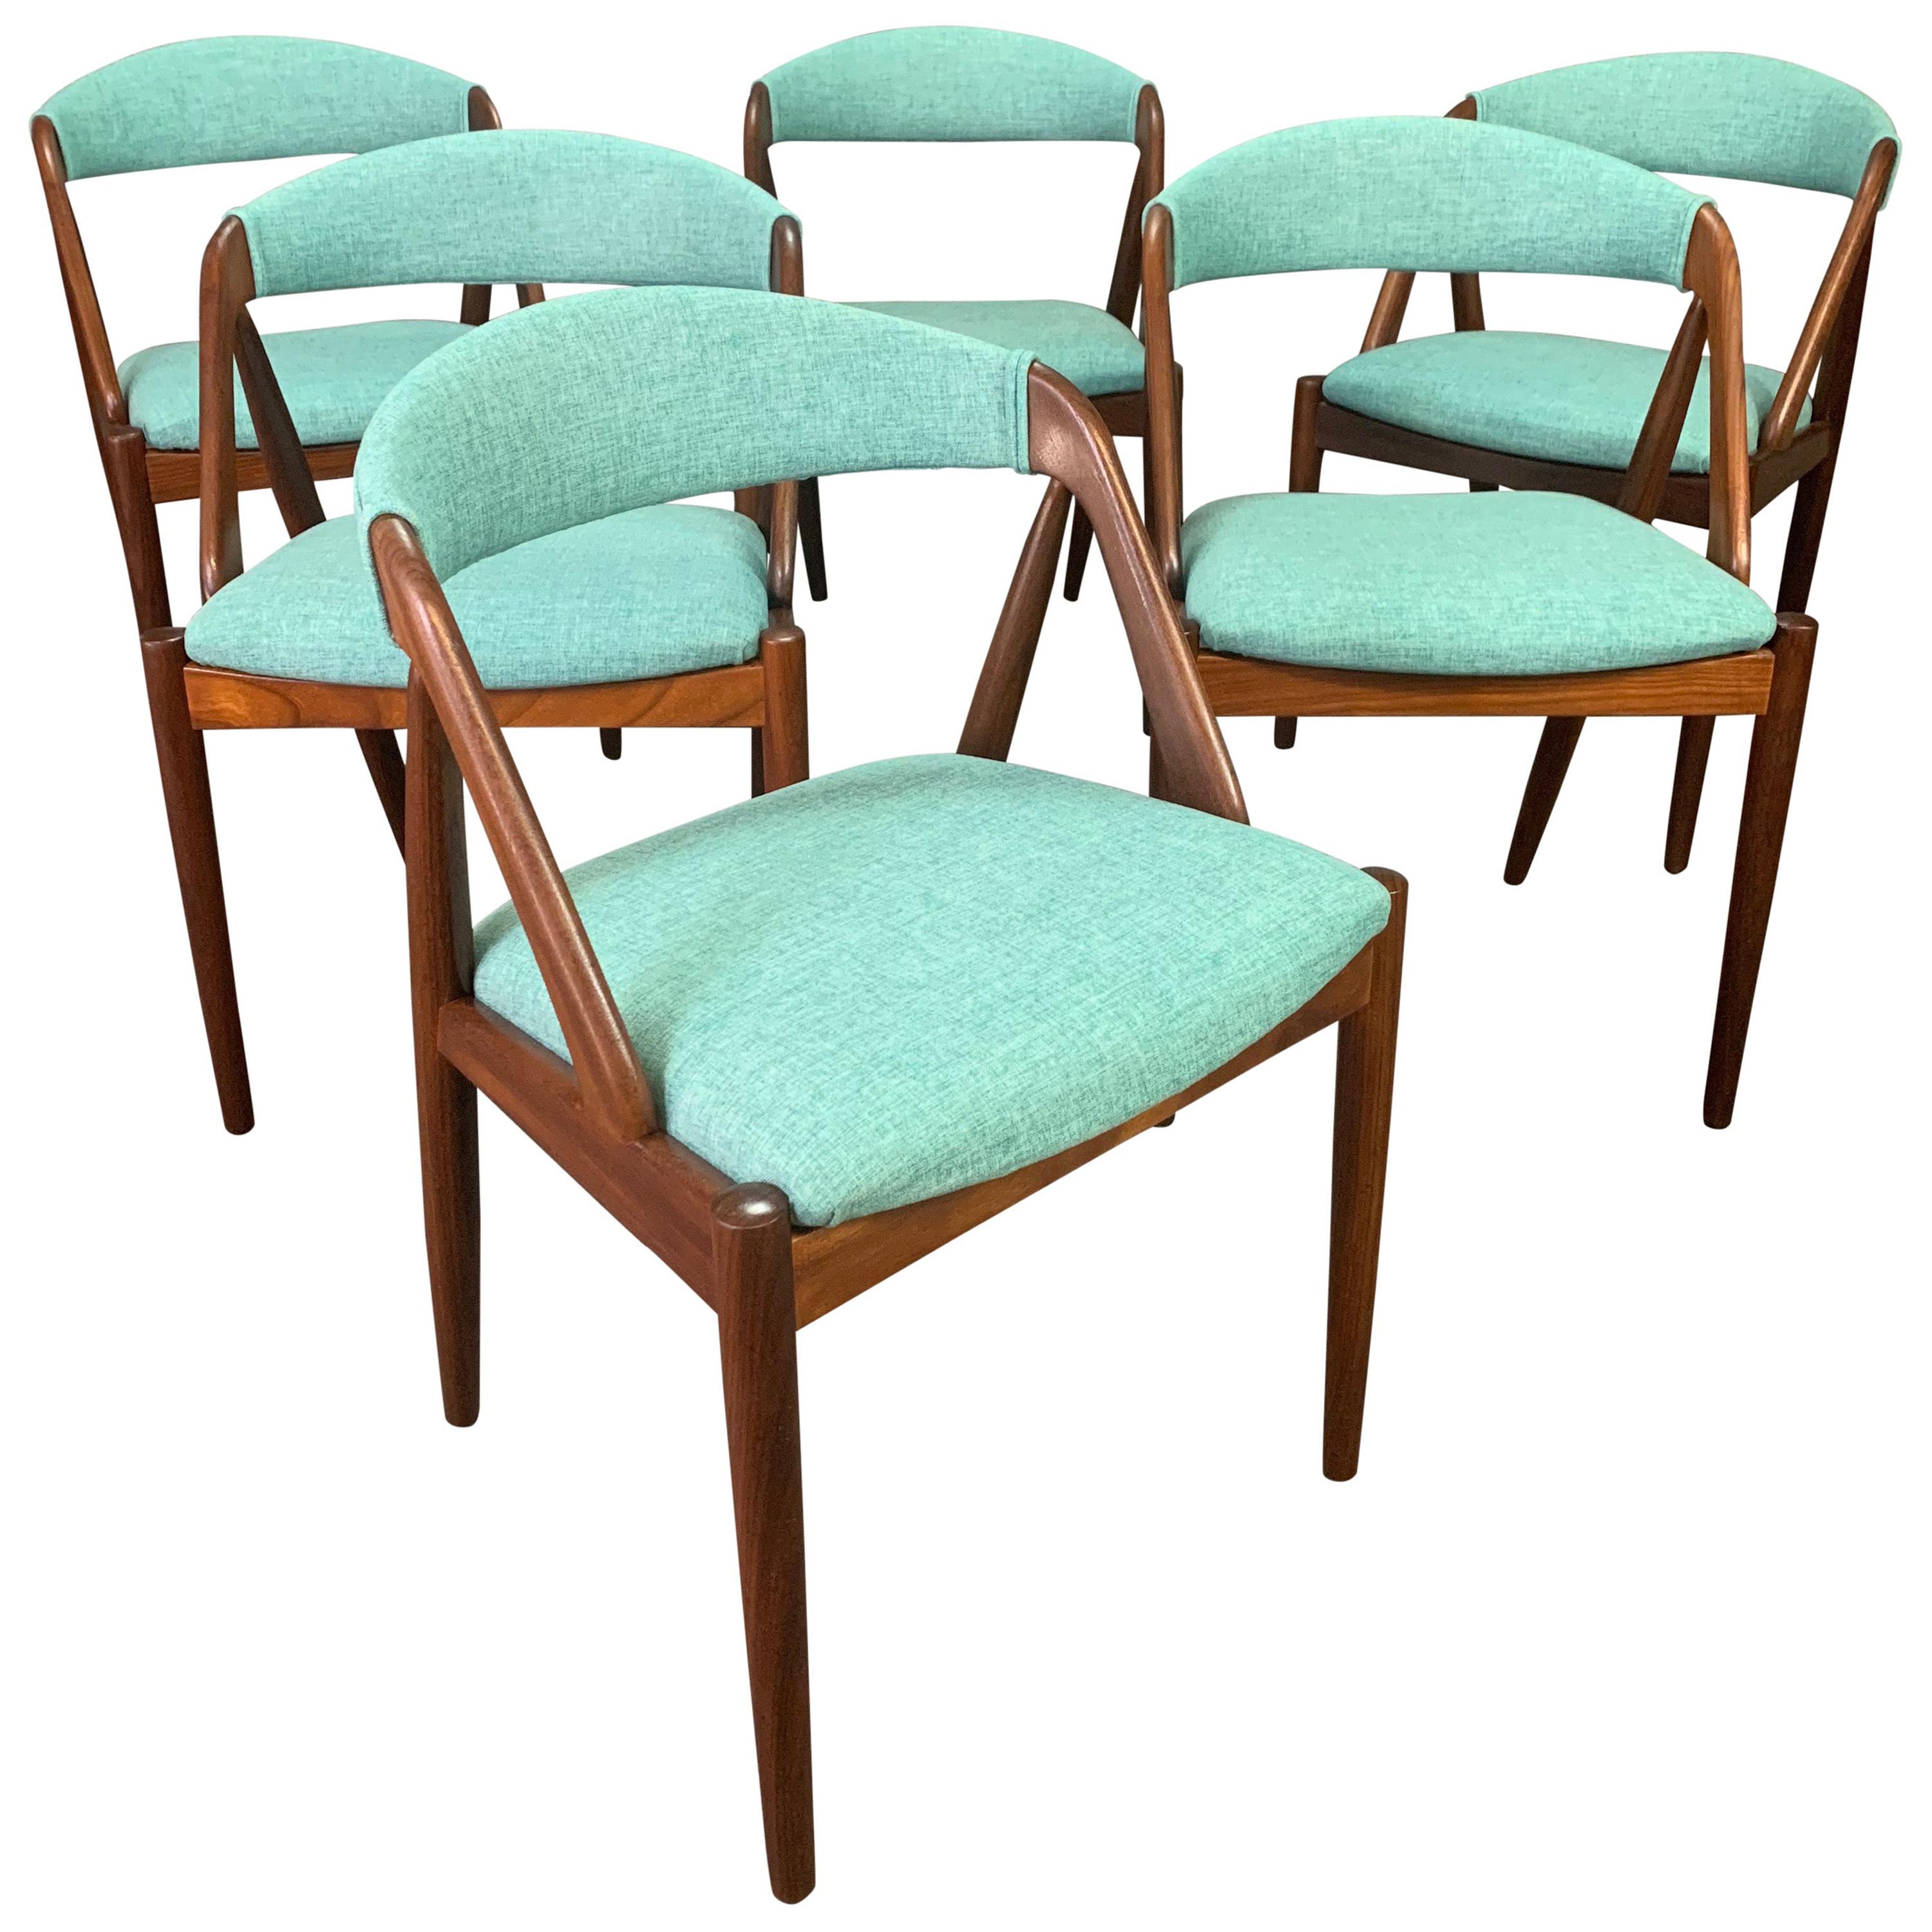 Six Vintage Danish Midcentury Teak Dining Chairs "Model 31" by Kai Kristiansen